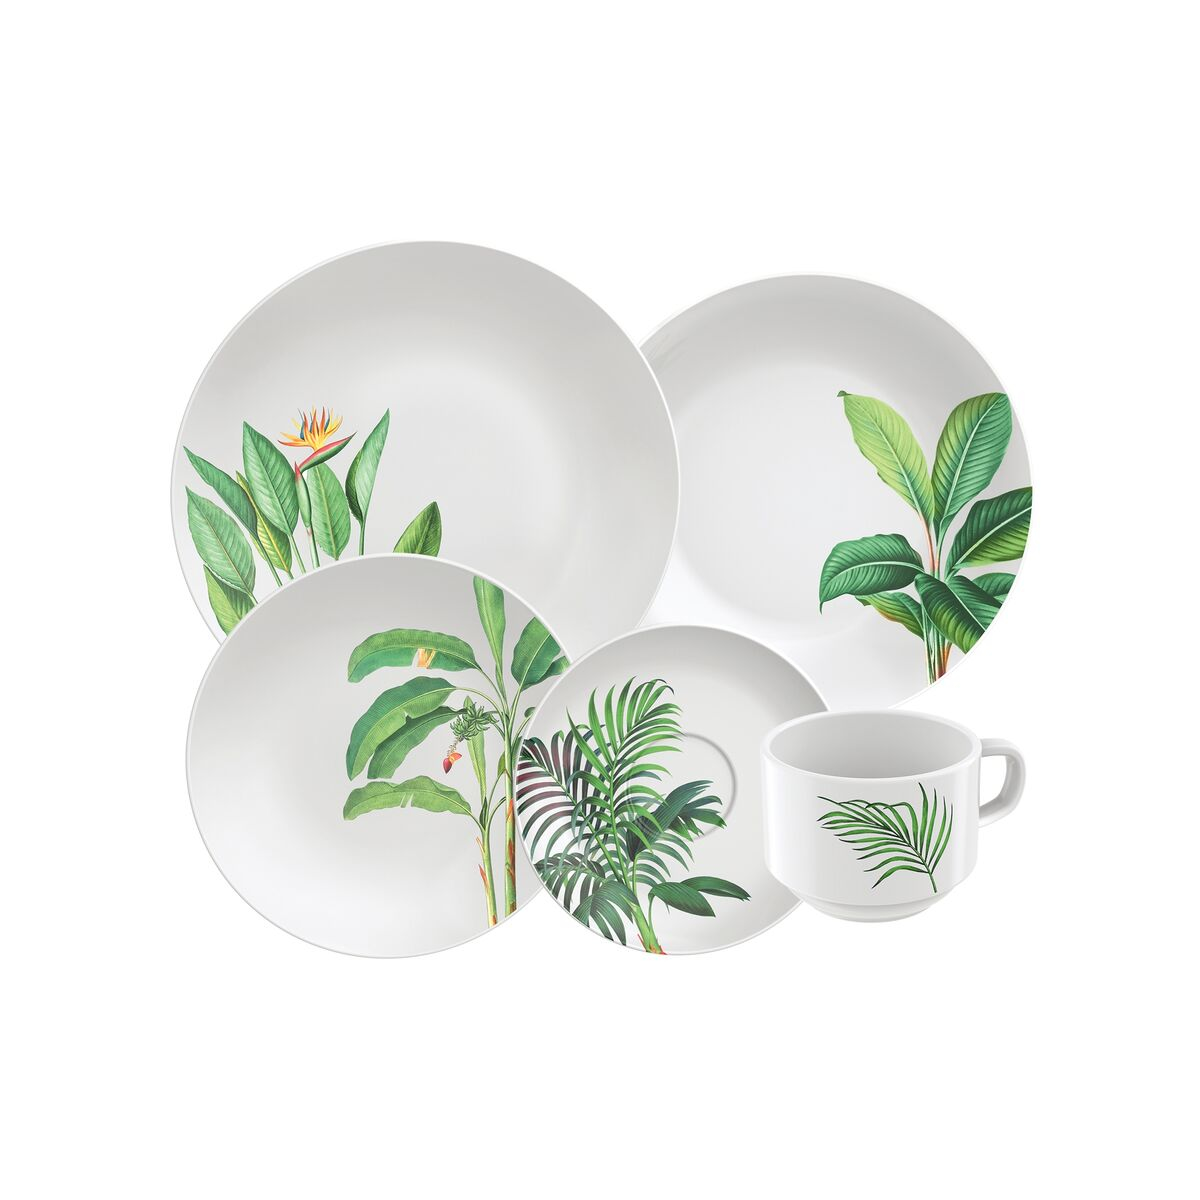 Tramontina Graziela Underglaze Porcelain Dinnerware 20 piece